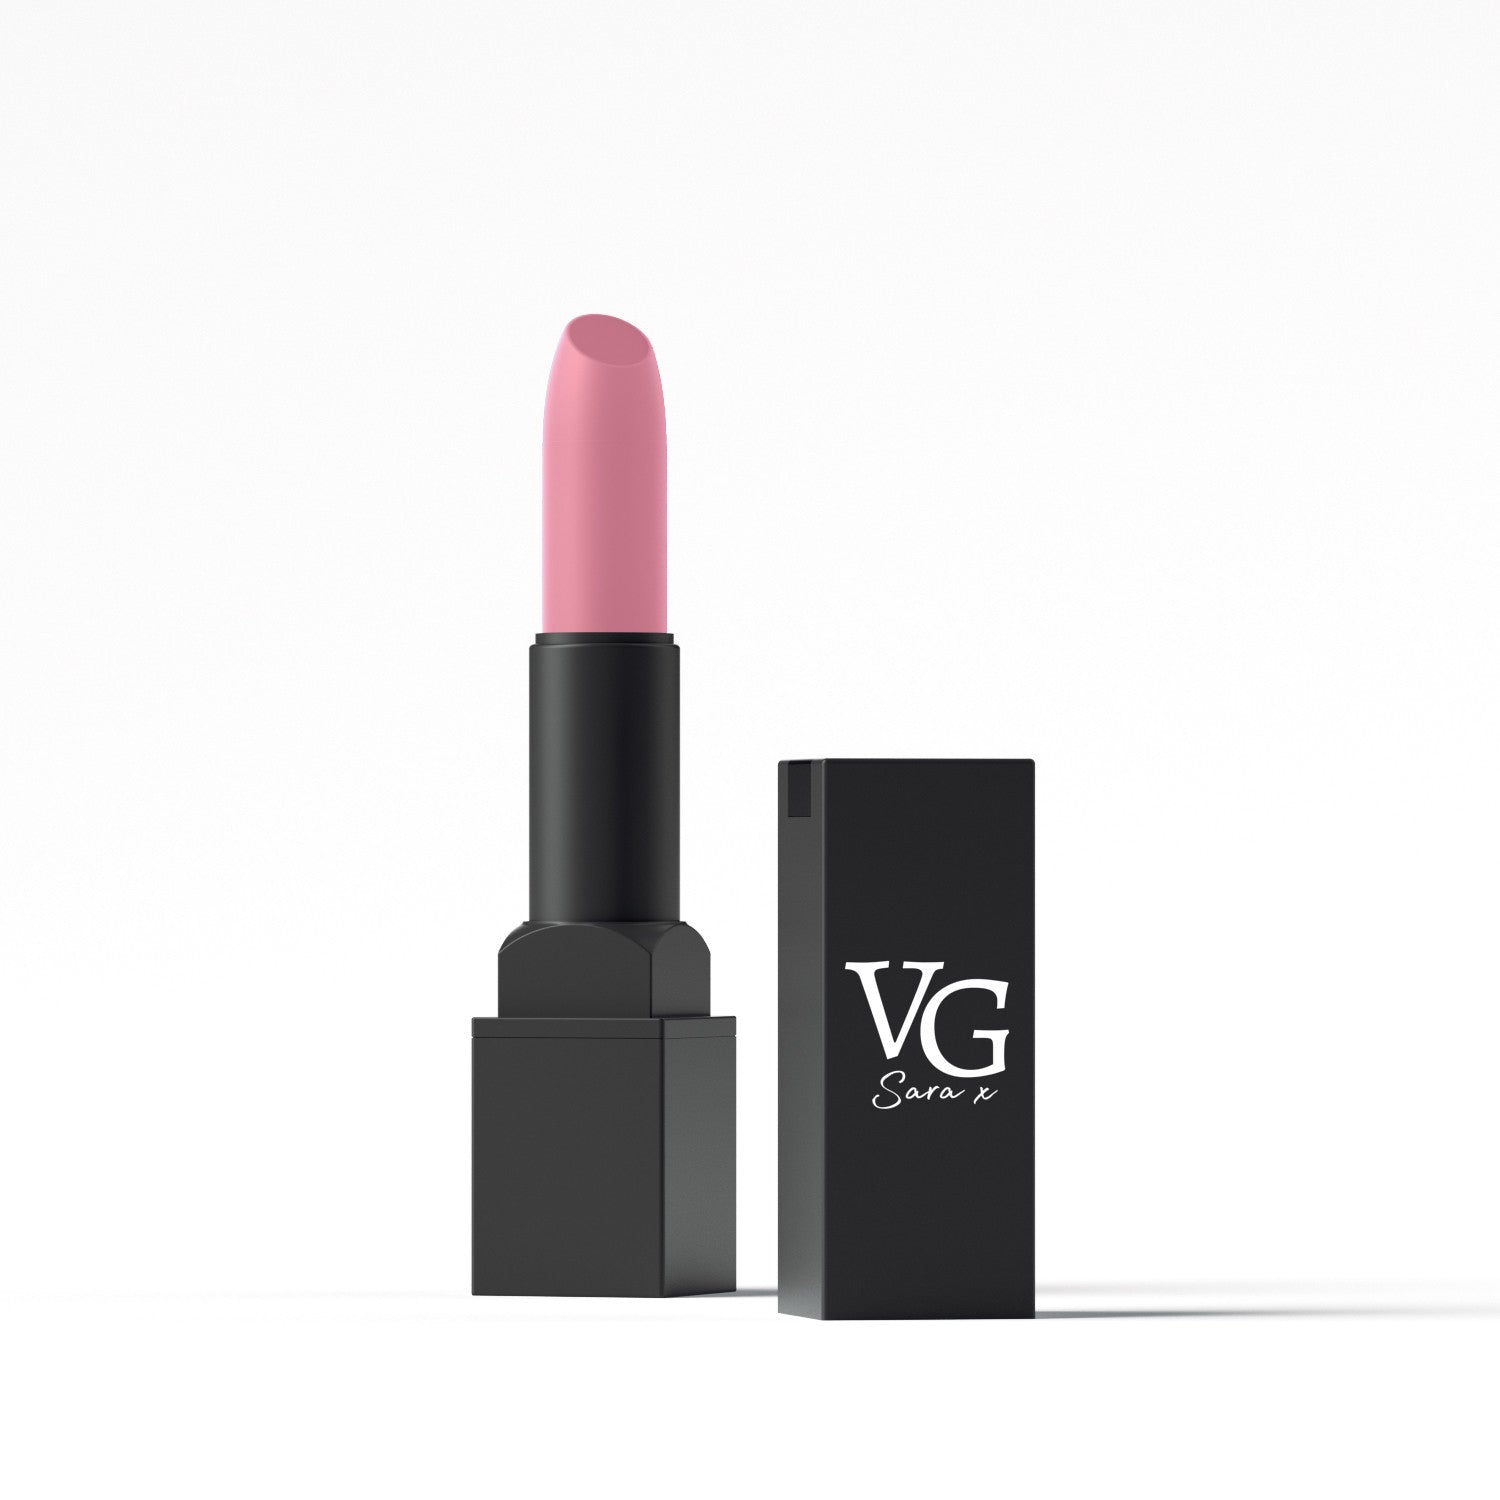 VG Cosmetics captivating shade lipstick presented with its elegant black box